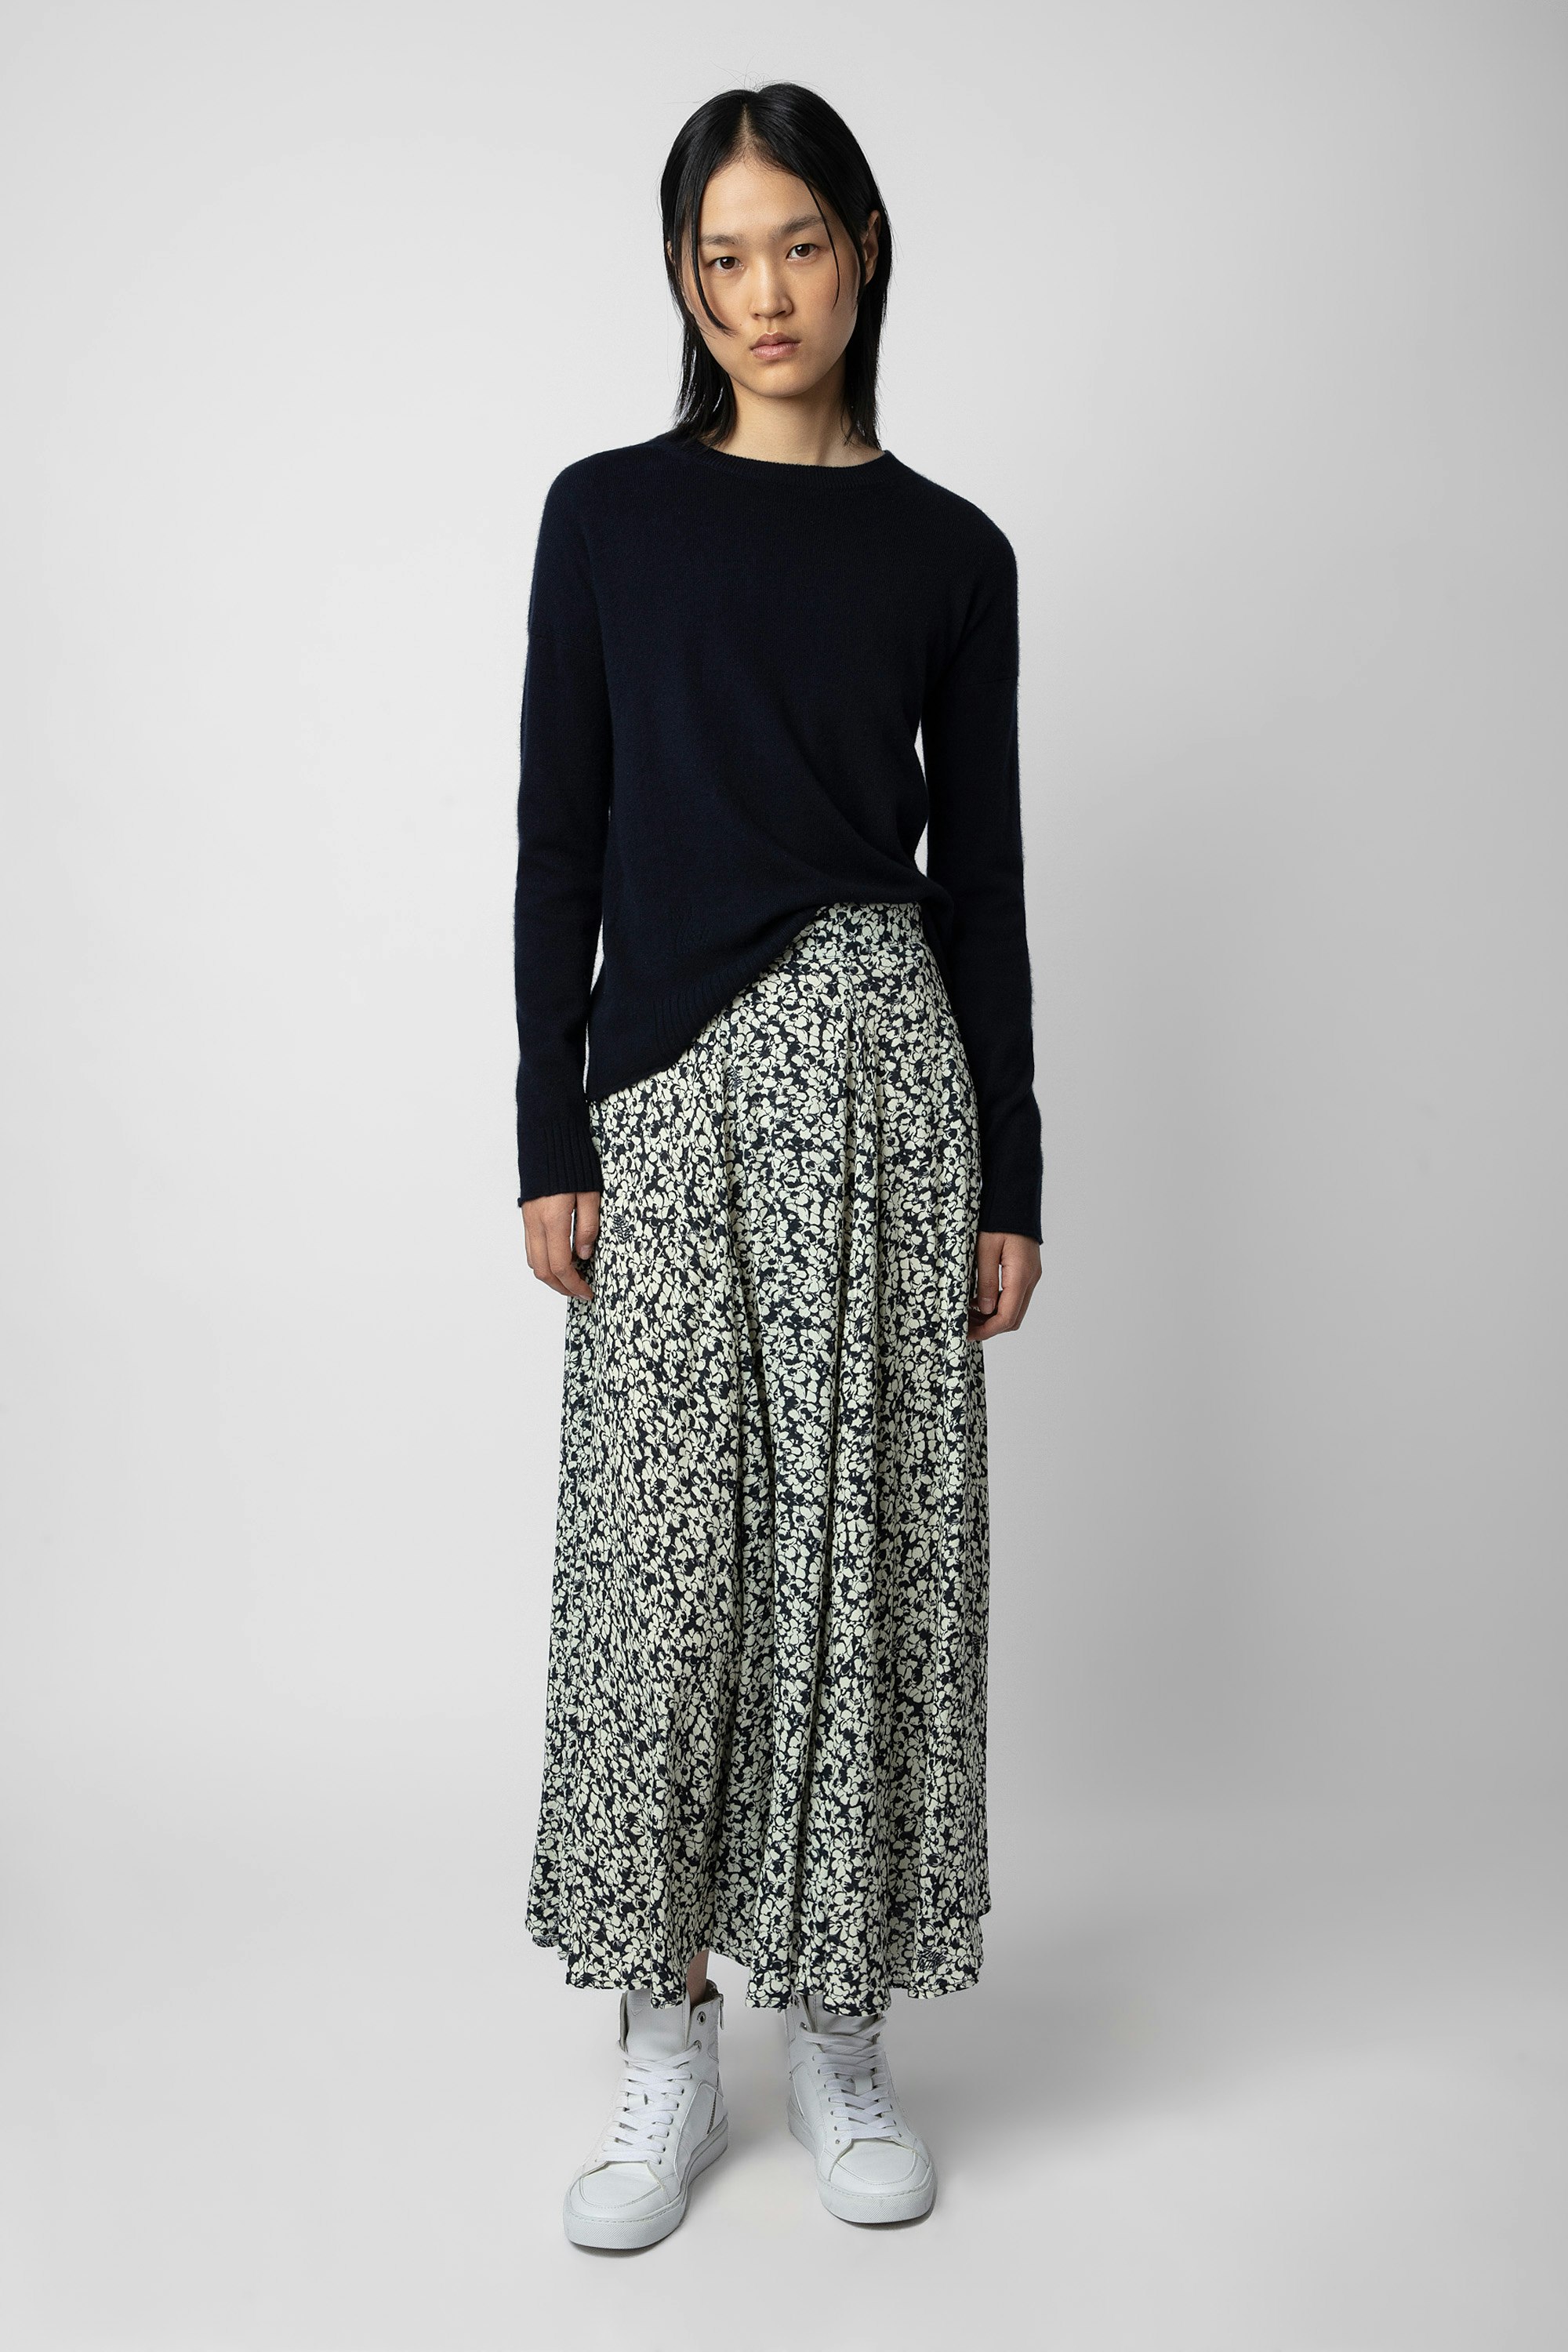 Joyo Skirt - Women’s long ecru floral-print skirt.